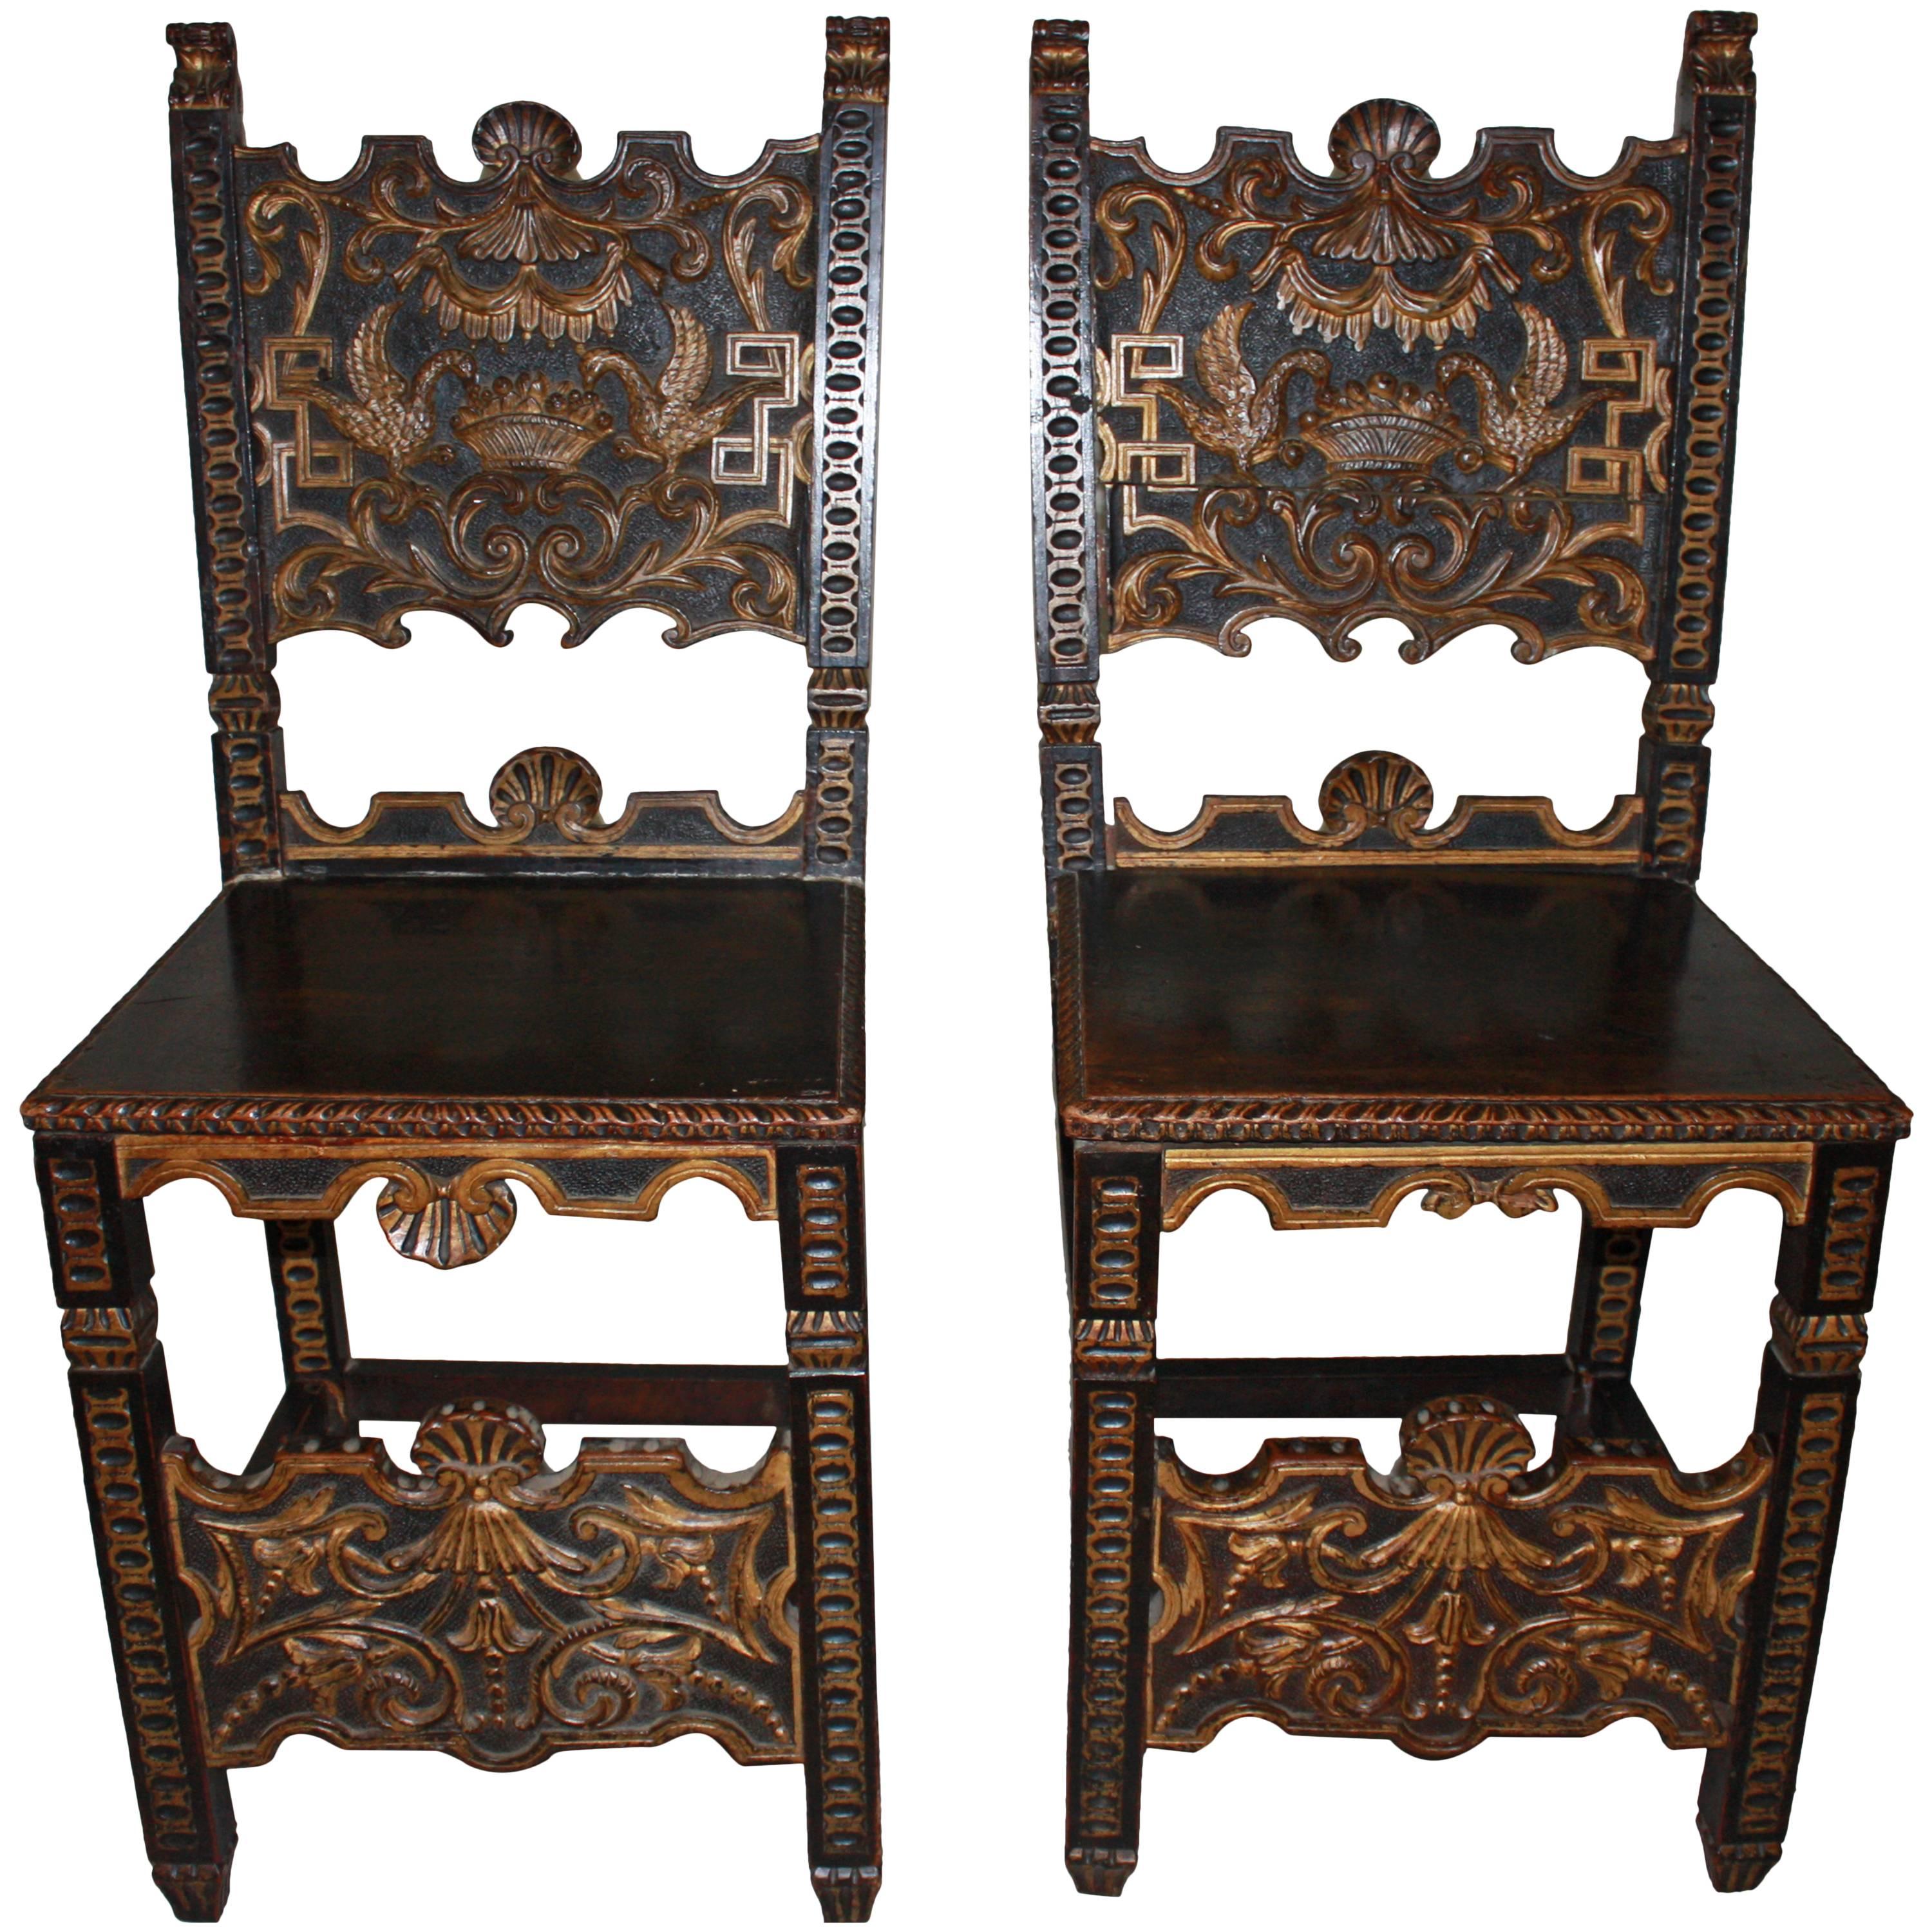 19th Century Portuguesh Chairs For Sale